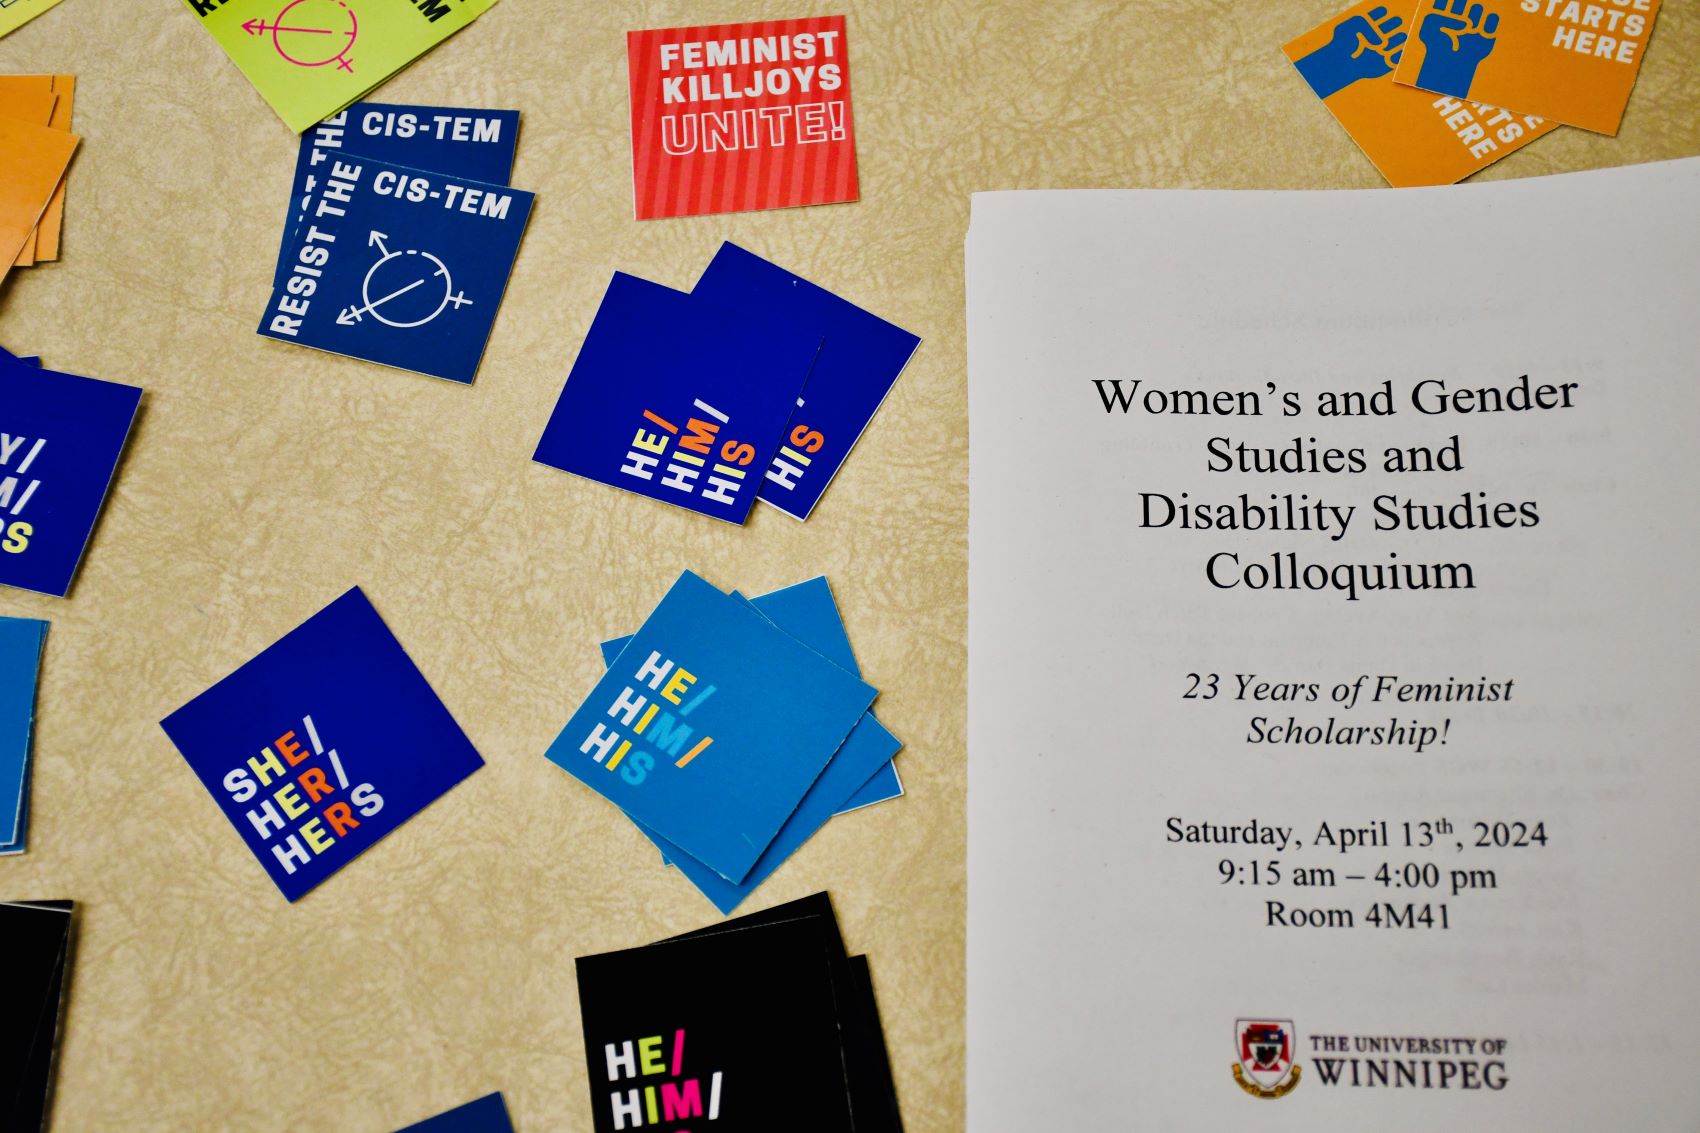 Colloquium program, surrounded by feminist/pronoun stickers